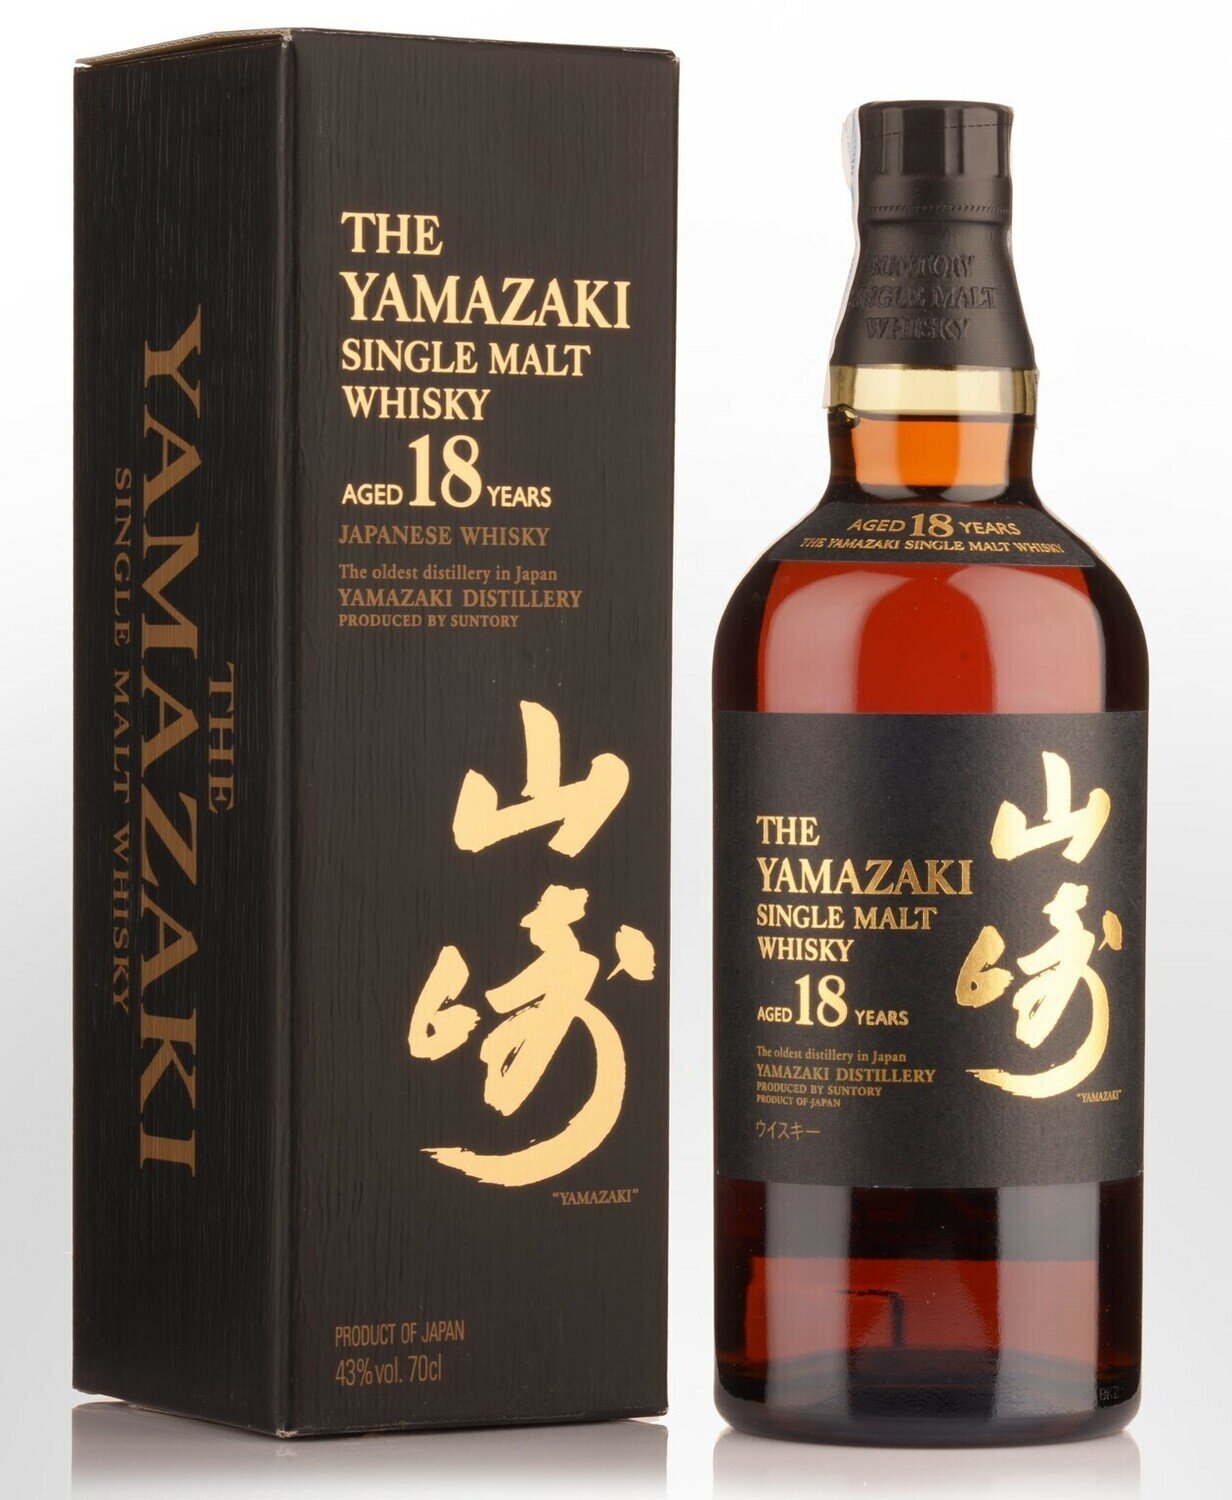 The Yamazaki 18 Year Old Single Malt Whisky